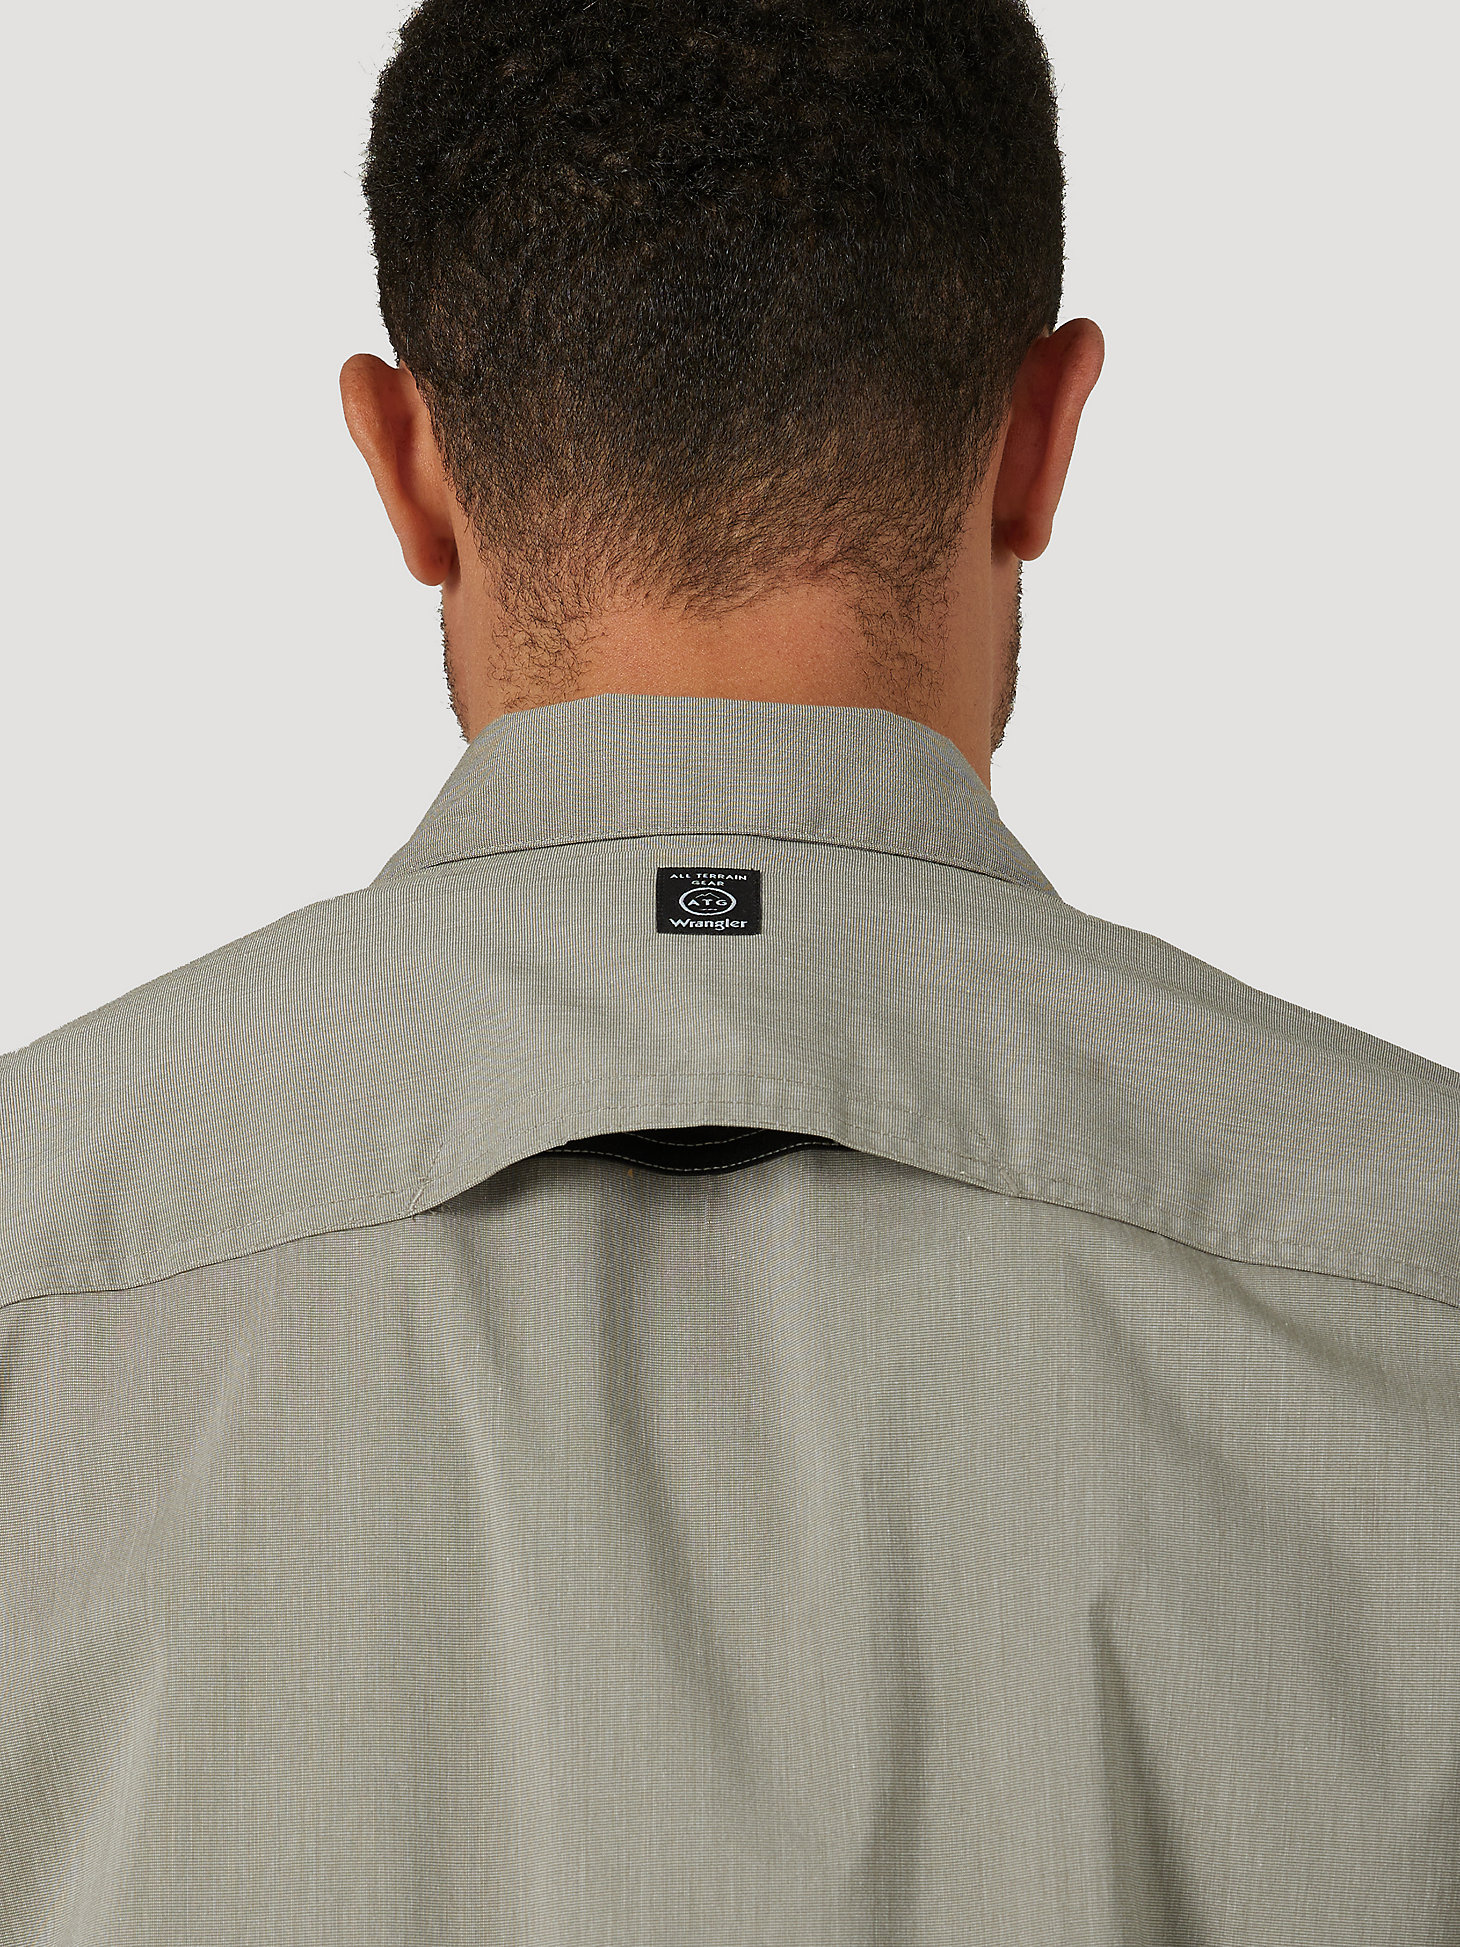 Short Sleeve Zip Pocket Shirt in Dusty Olive alternative view 5